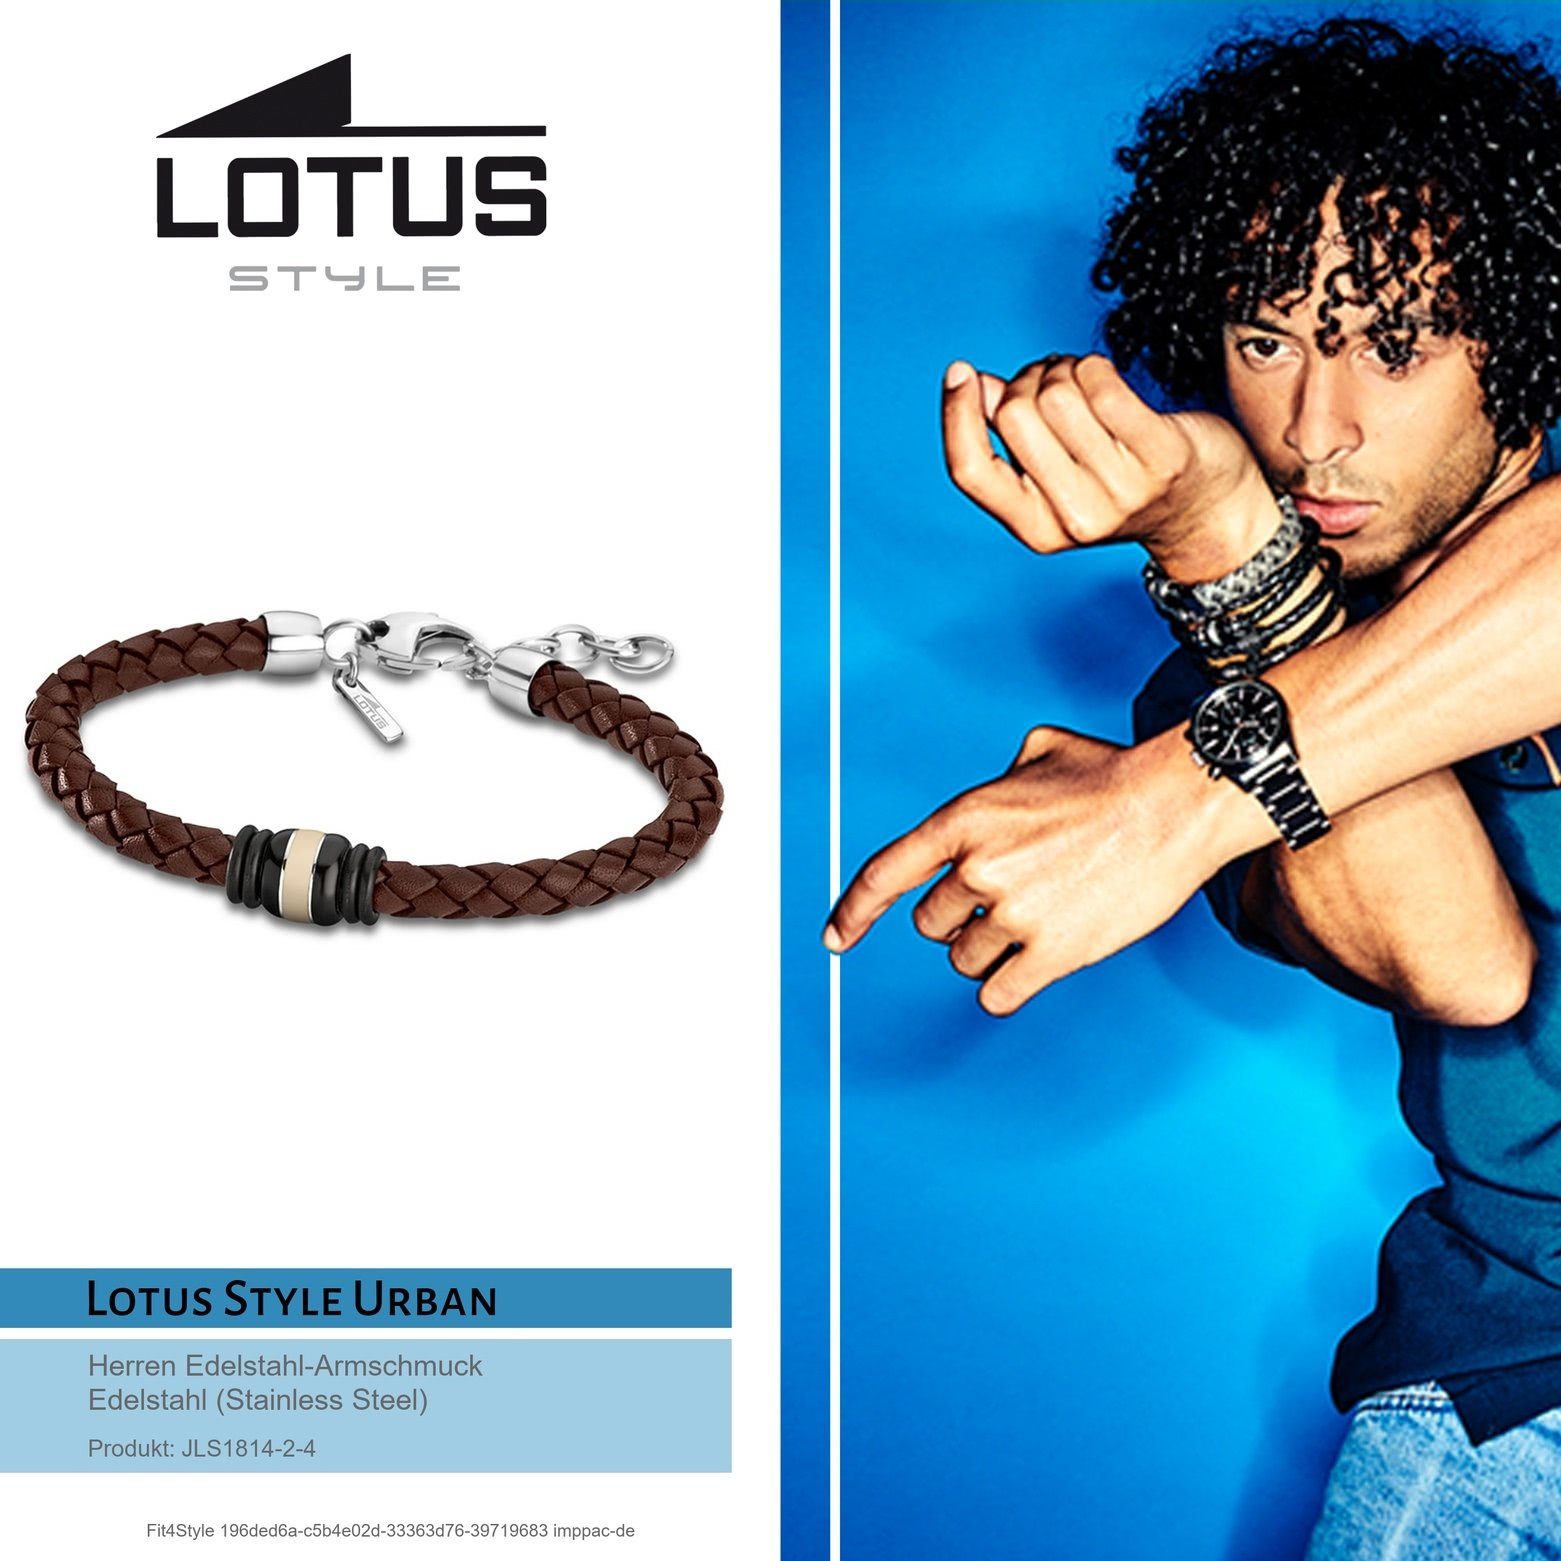 Lotus Style Edelstahlarmband Lotus Style Armbänder Steel) silber Armband (Stainless Herren für (Armband), Edelstahl braun